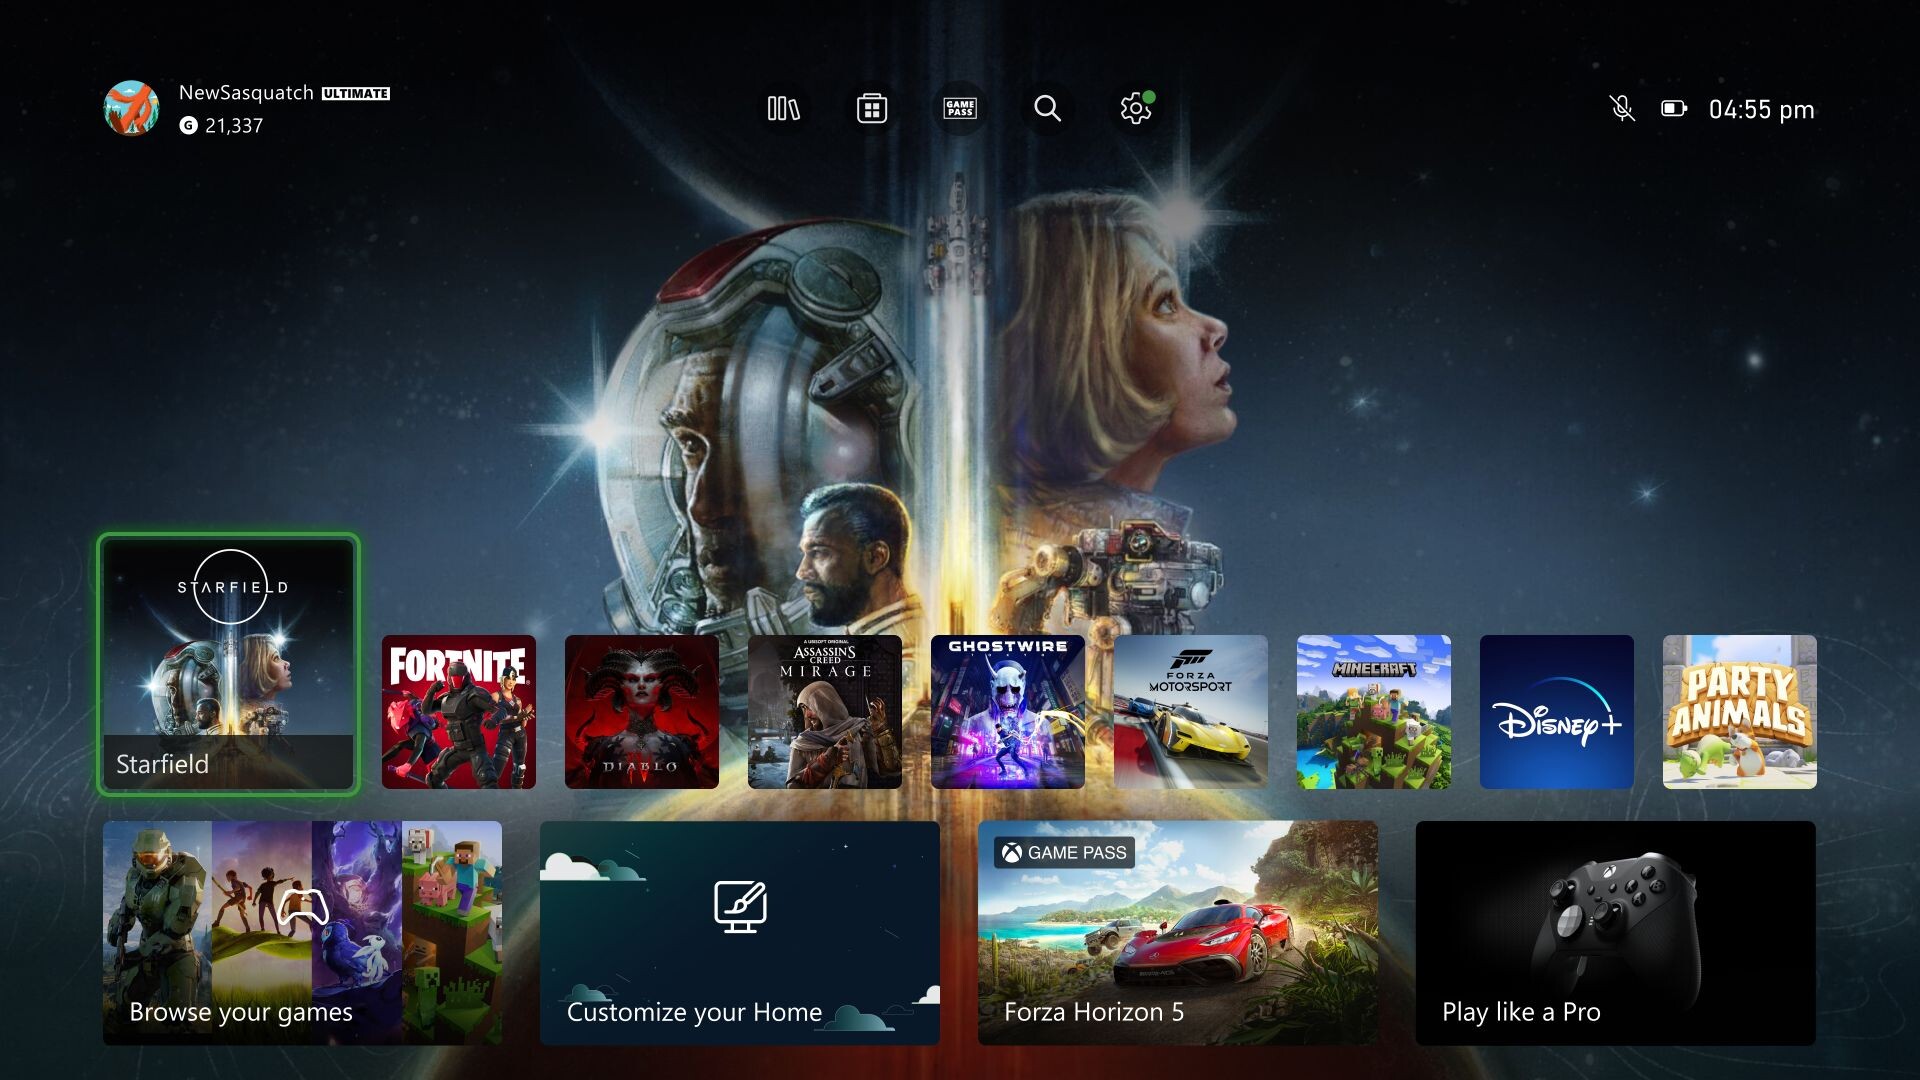 Origin PC creates PC, Xbox One X, PS4 Pro & Switch hybrid tower - Systems -  News 